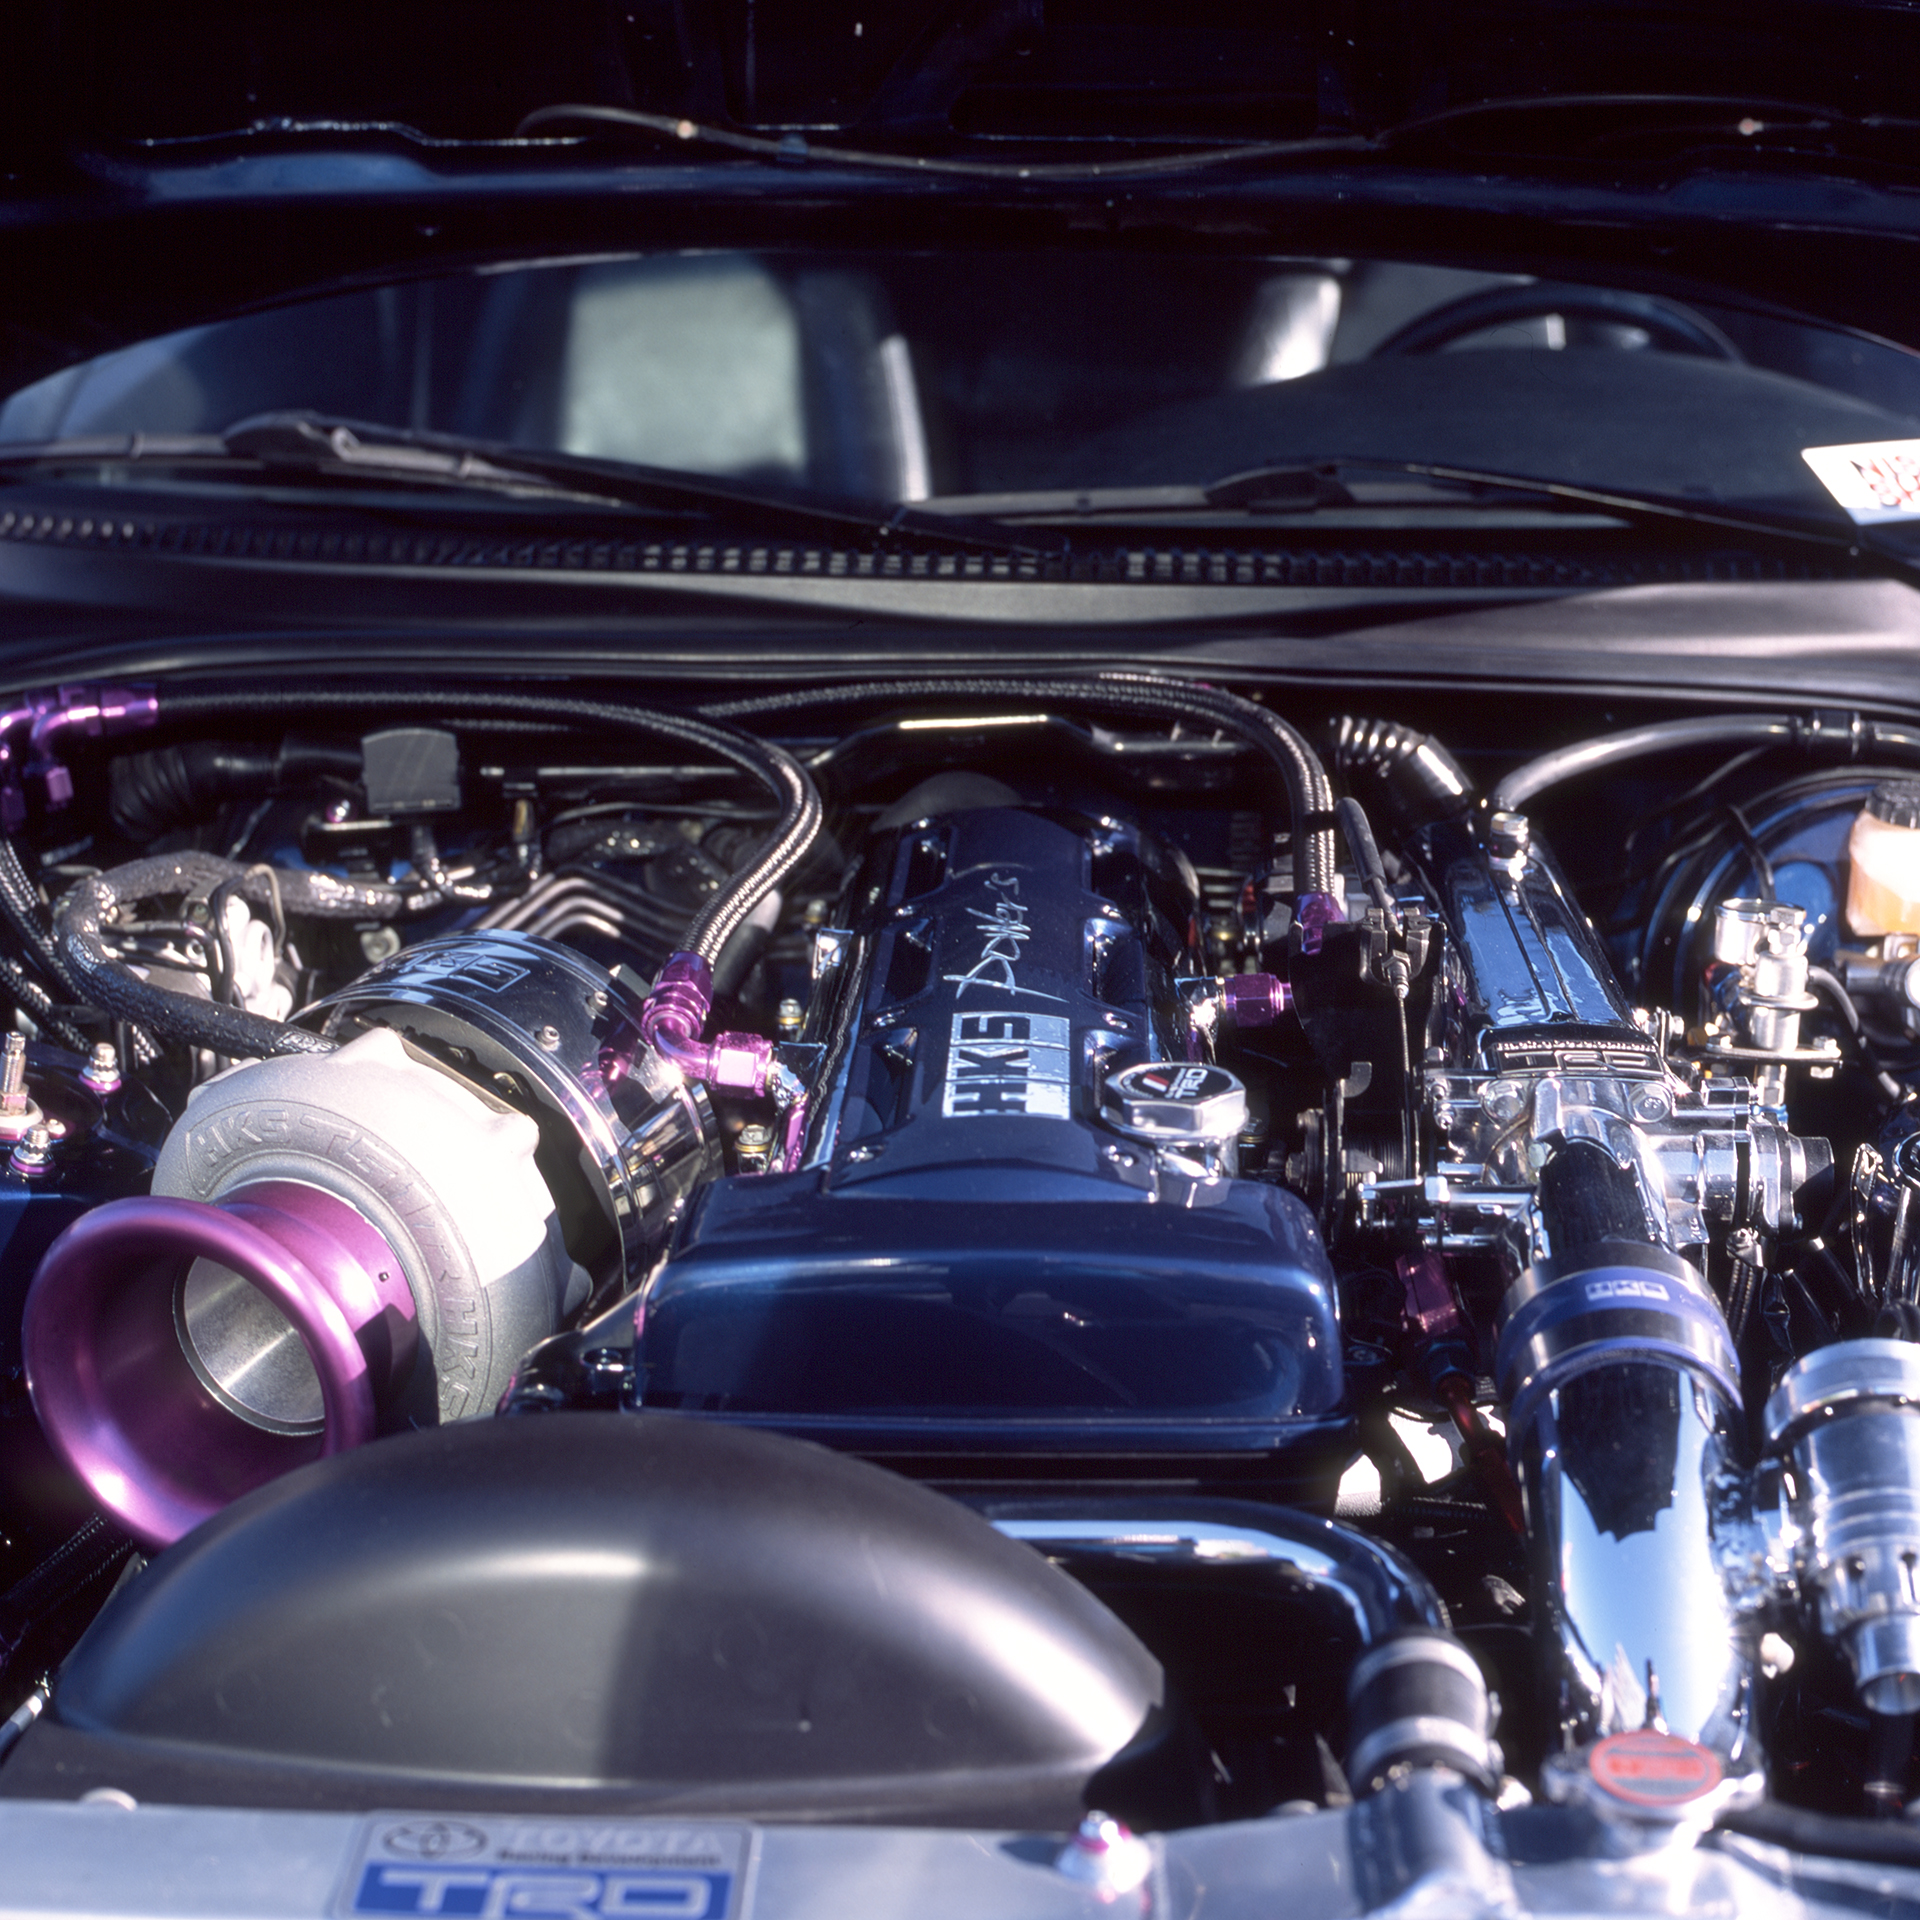 Toyota Supra Mk4 engine bay with a lot of shiny HKS upgrades